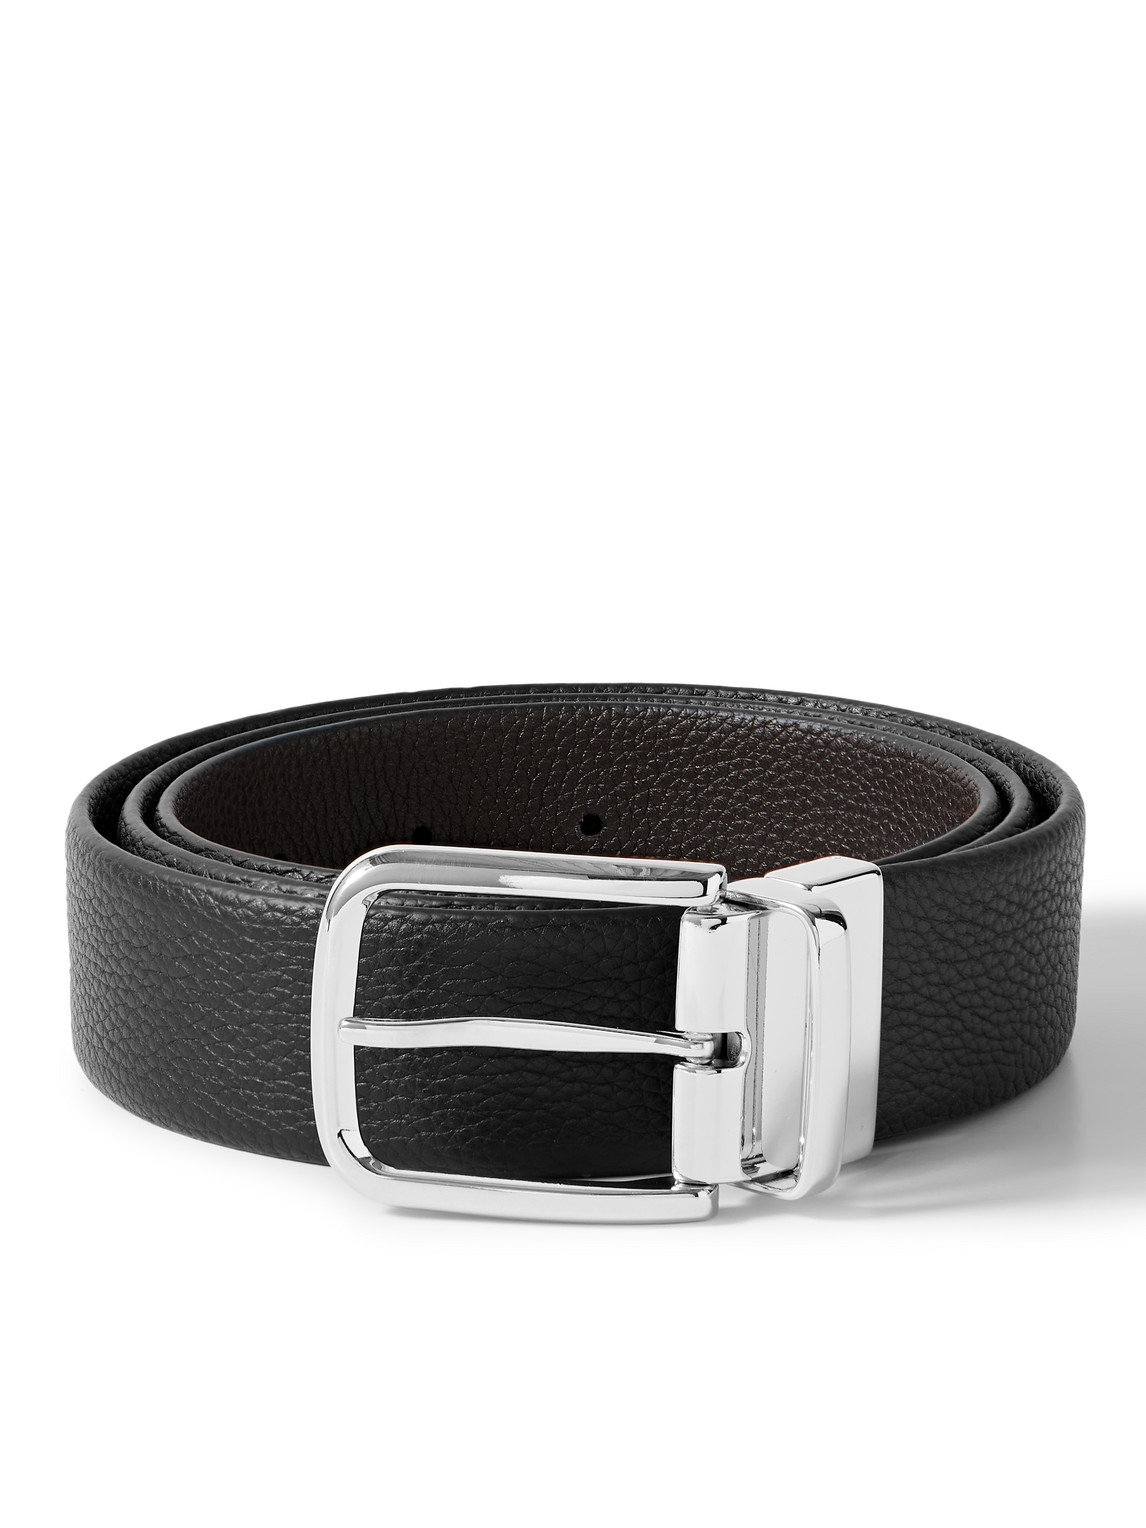 Anderson's 3.5cm Reversible Full-grain Leather Belt In Black